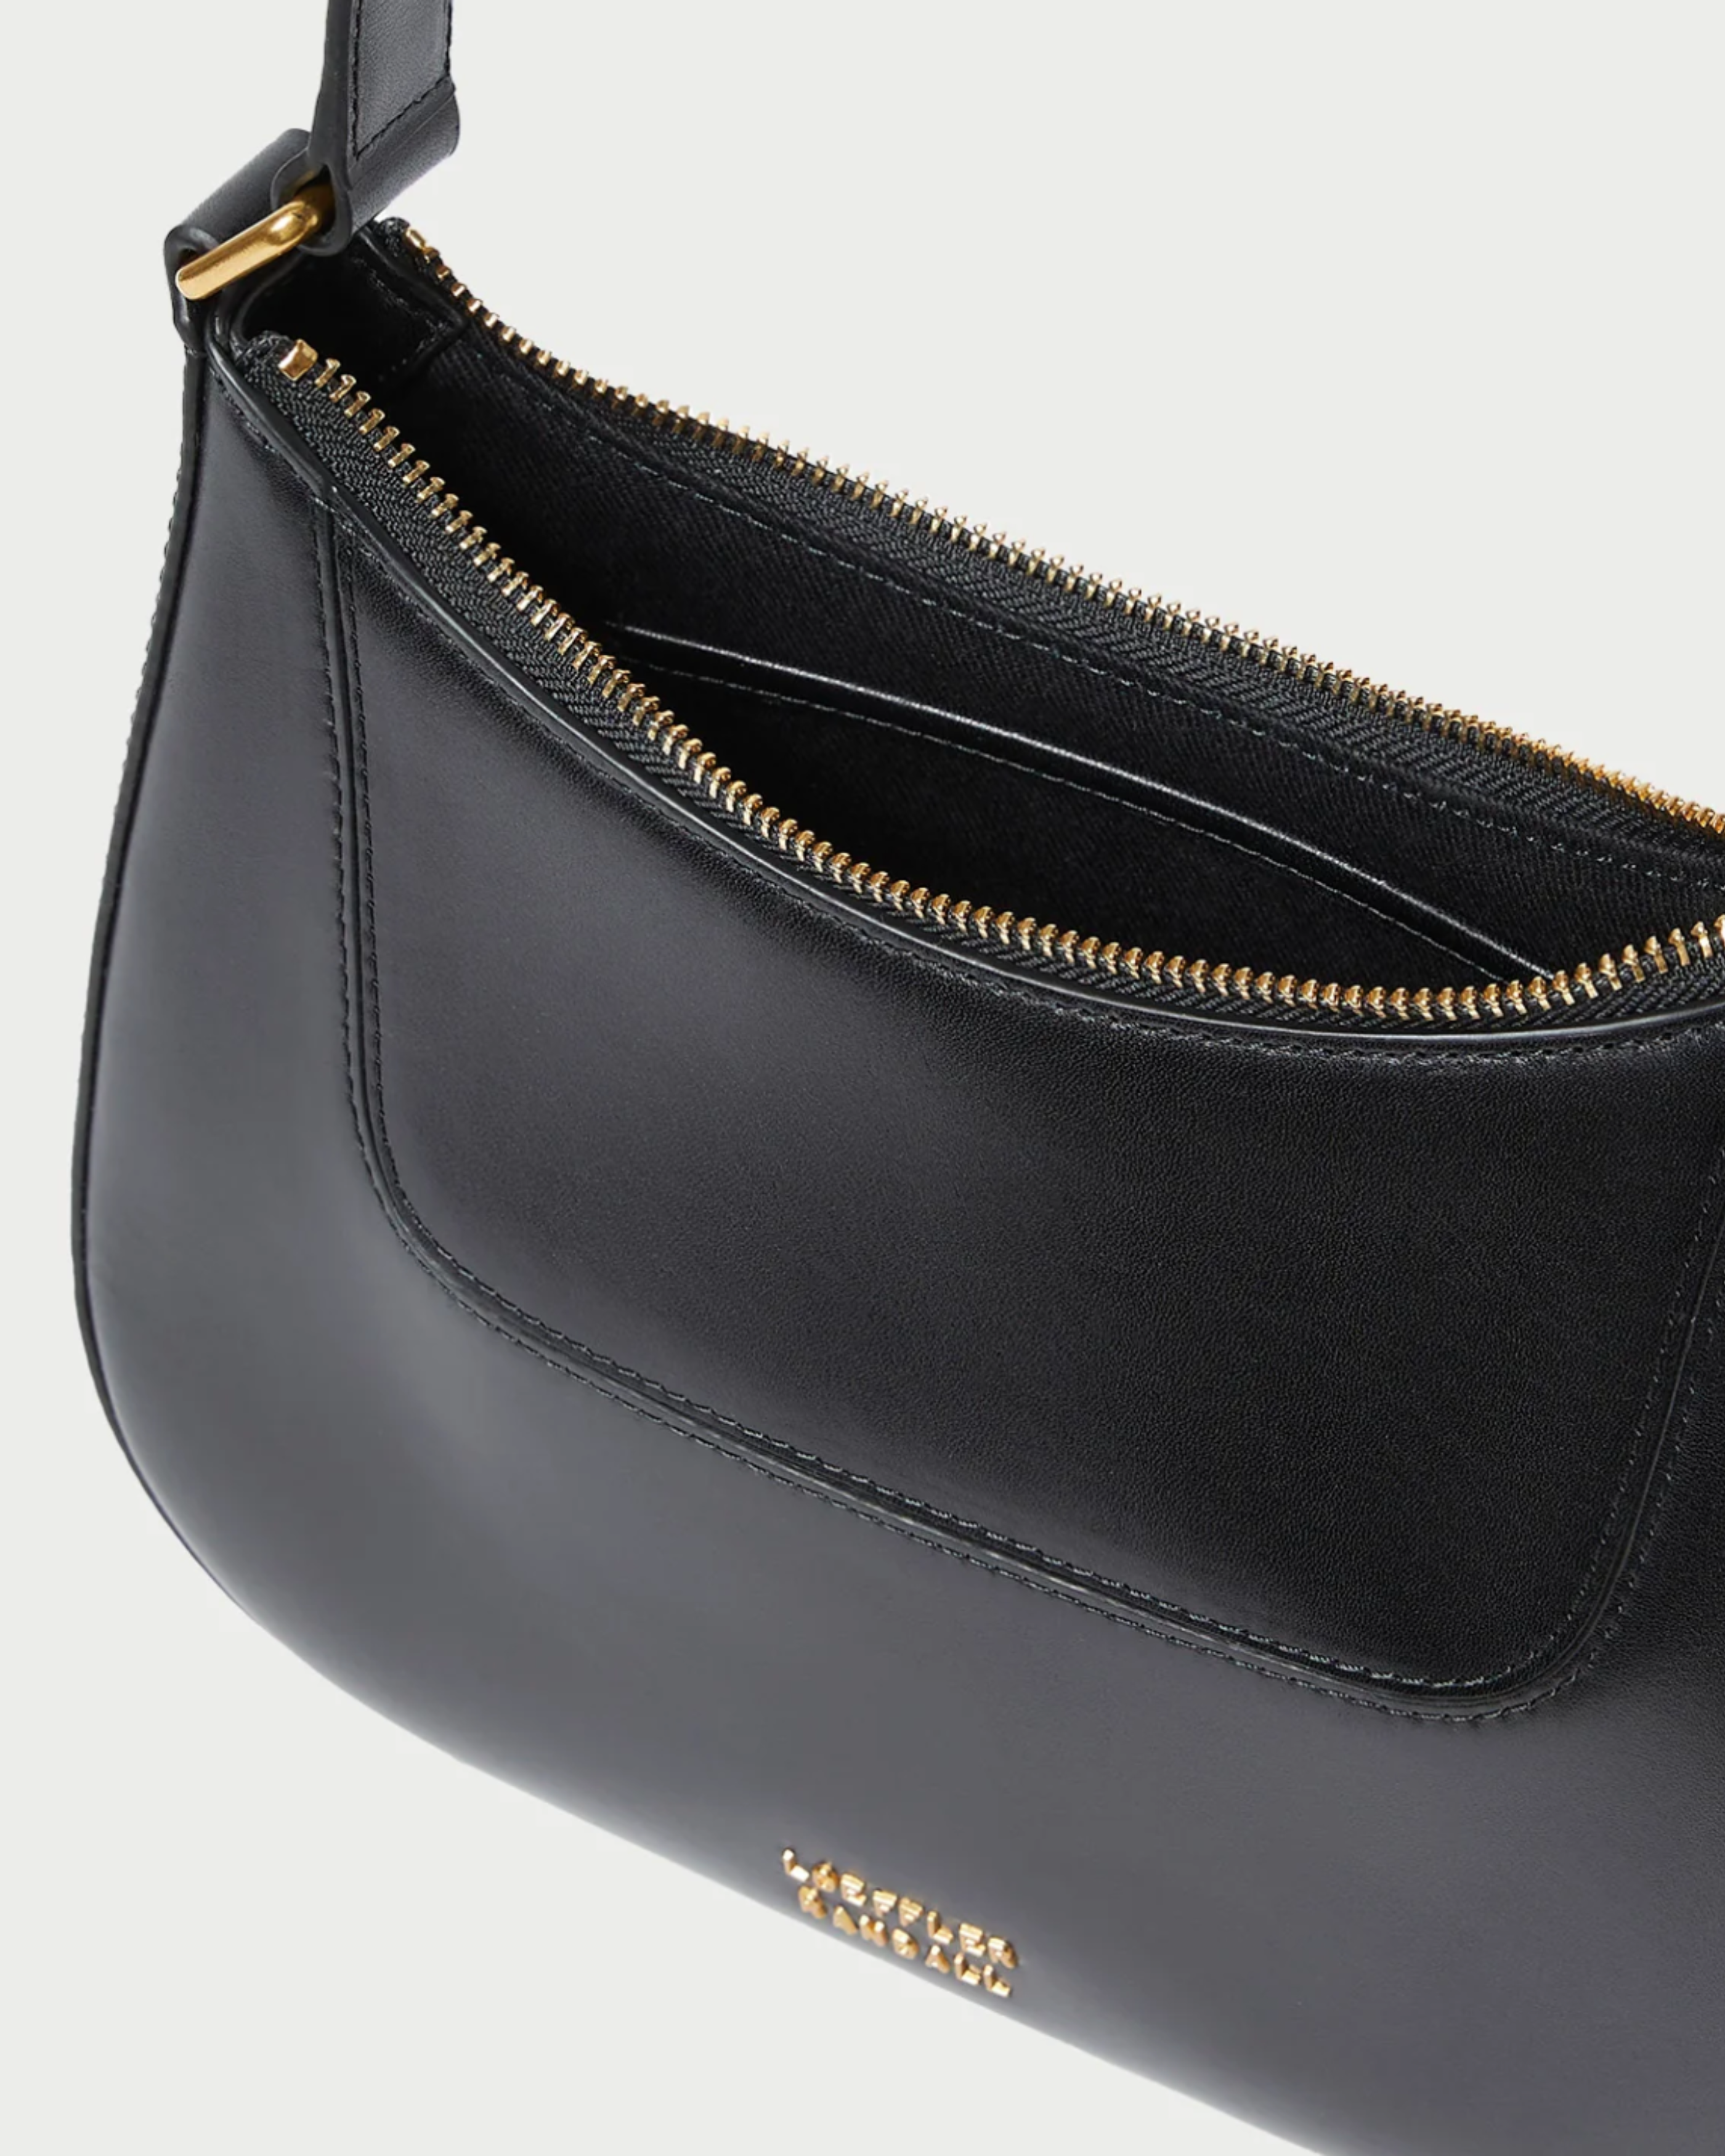 Loeffler Randall Greta Leather Shoulder Bag in Black